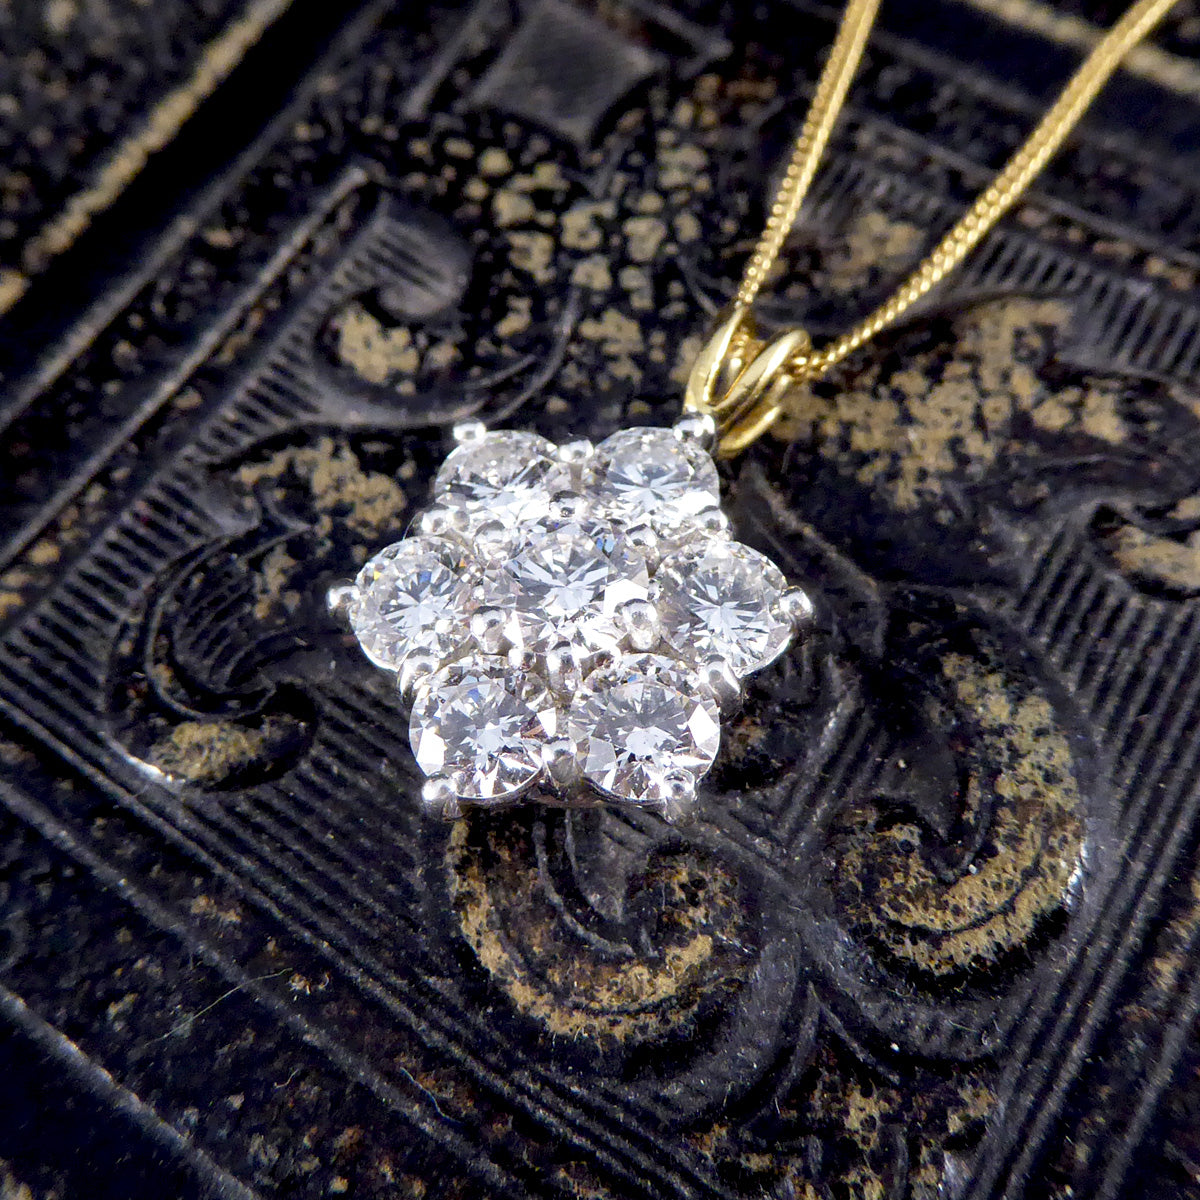 Buy Diamond Flower Necklace / 14k Daisy Diamond Necklace / Diamond Pendant  Necklace / Everyday Necklace / Daisy Flower Pendant / Bridesmaid Gift  Online in India - Etsy